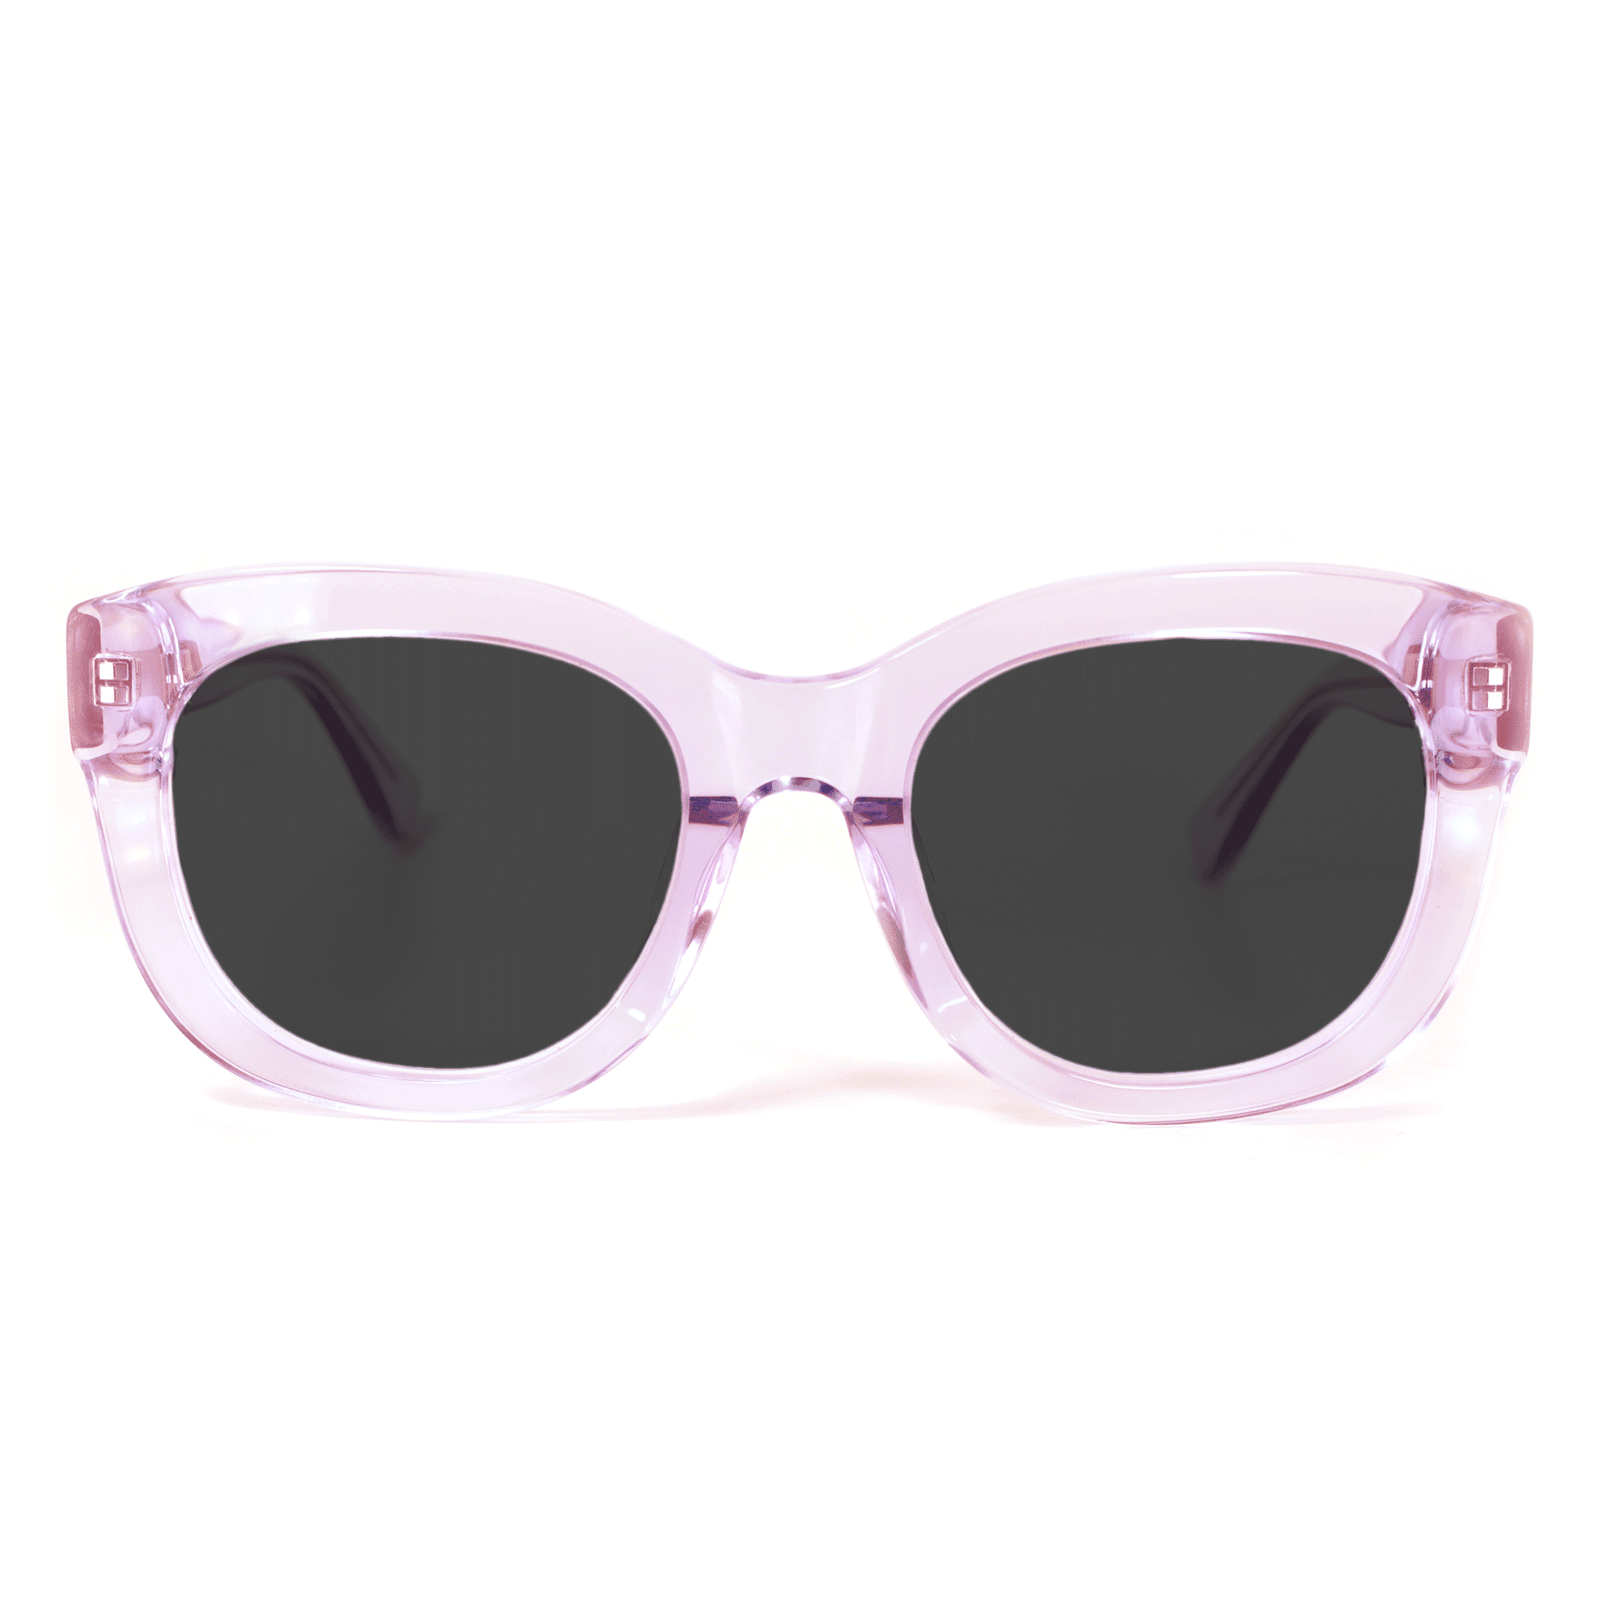 Sunglasses + Eyewear Sticker Bundles - PaprDoll